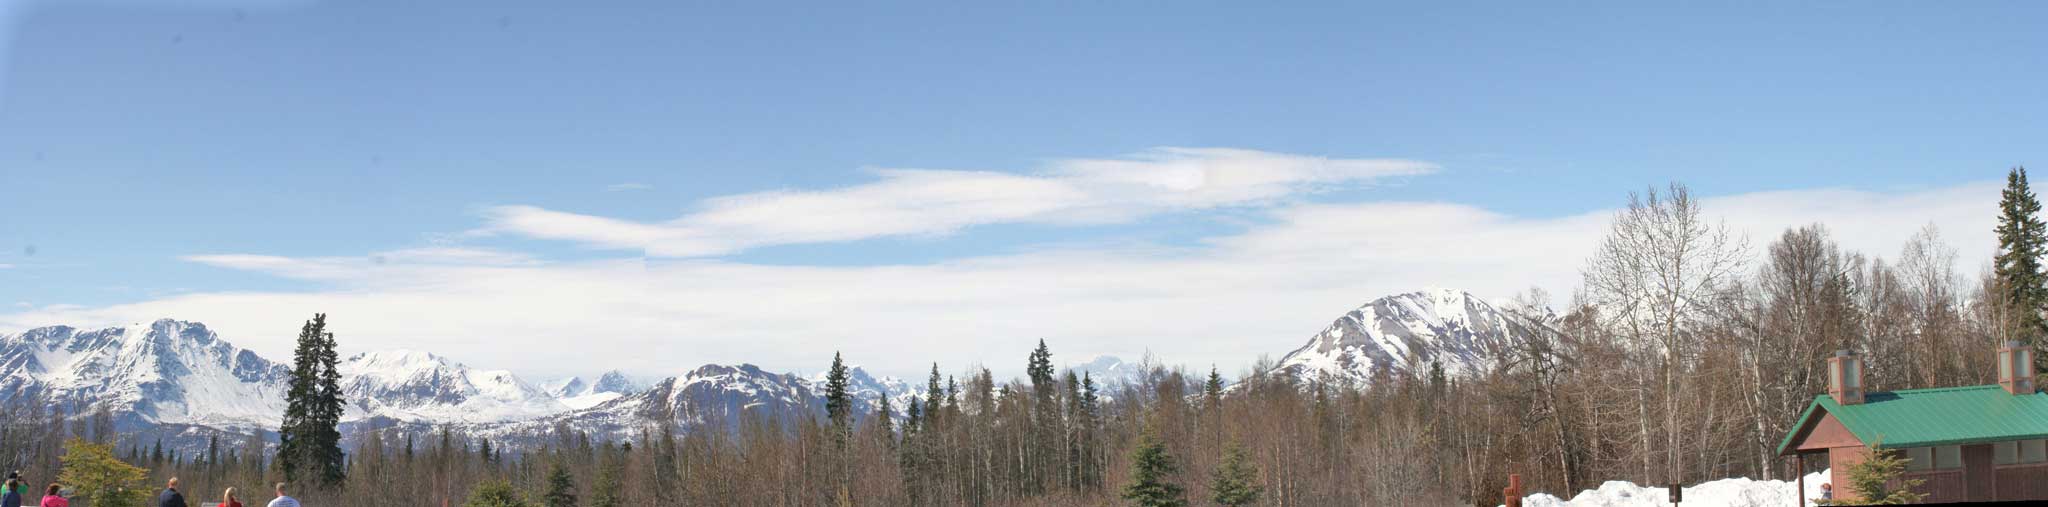 Alaska-Stitch01.jpg